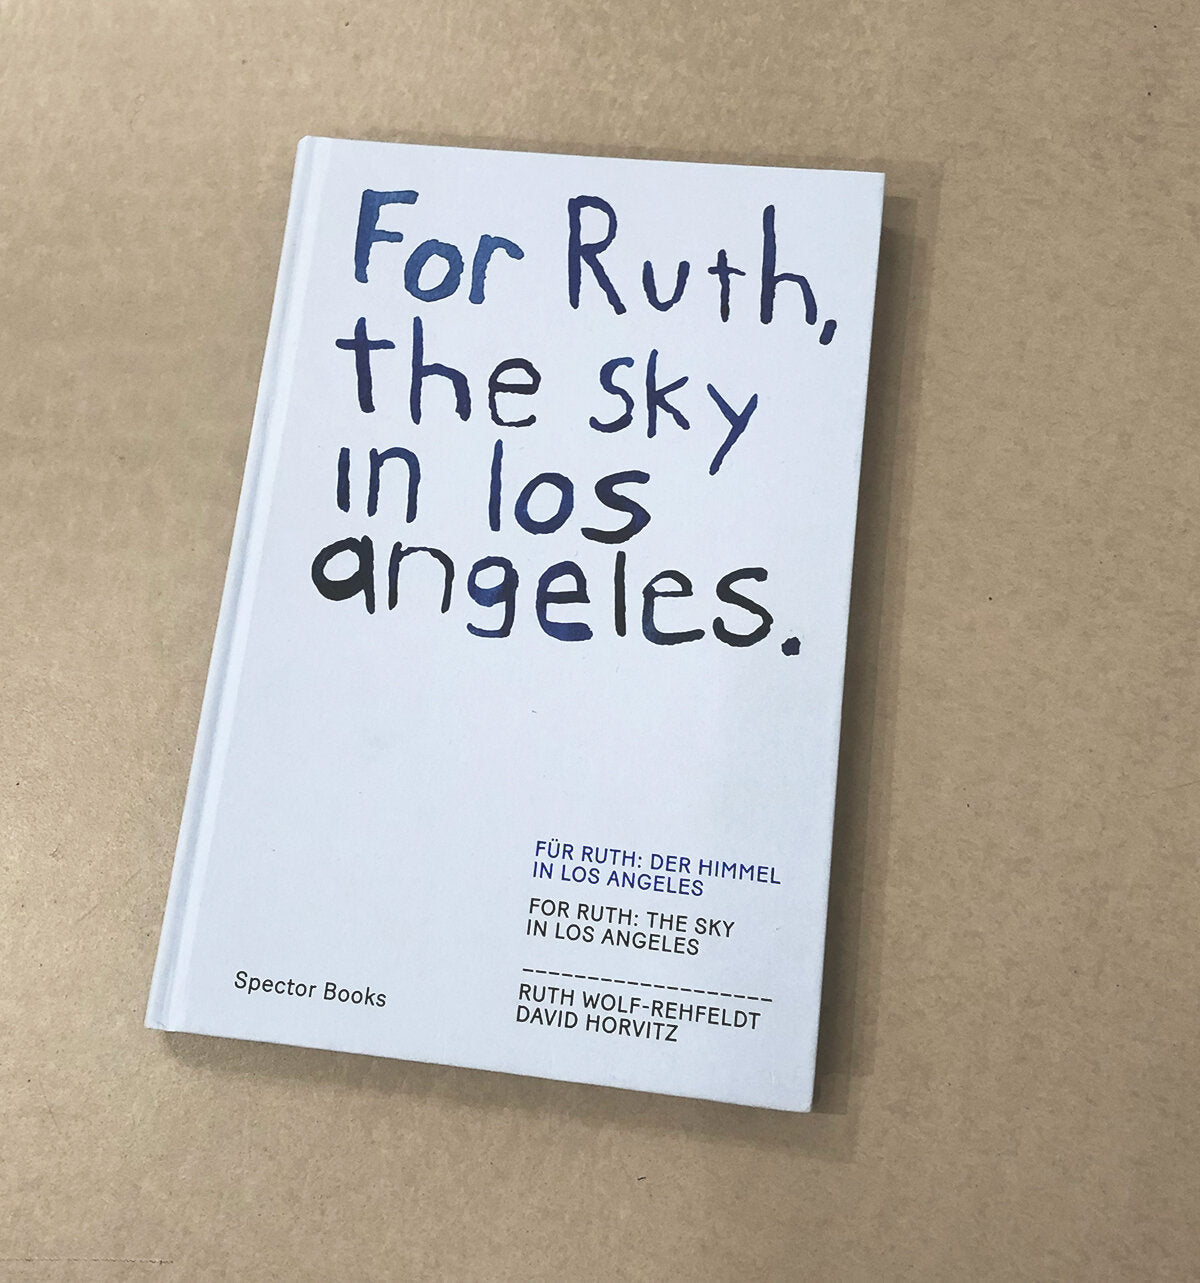 For Ruth, the sky in los angeles - David Horvitz, Ruth Wolf-Rehfeldt